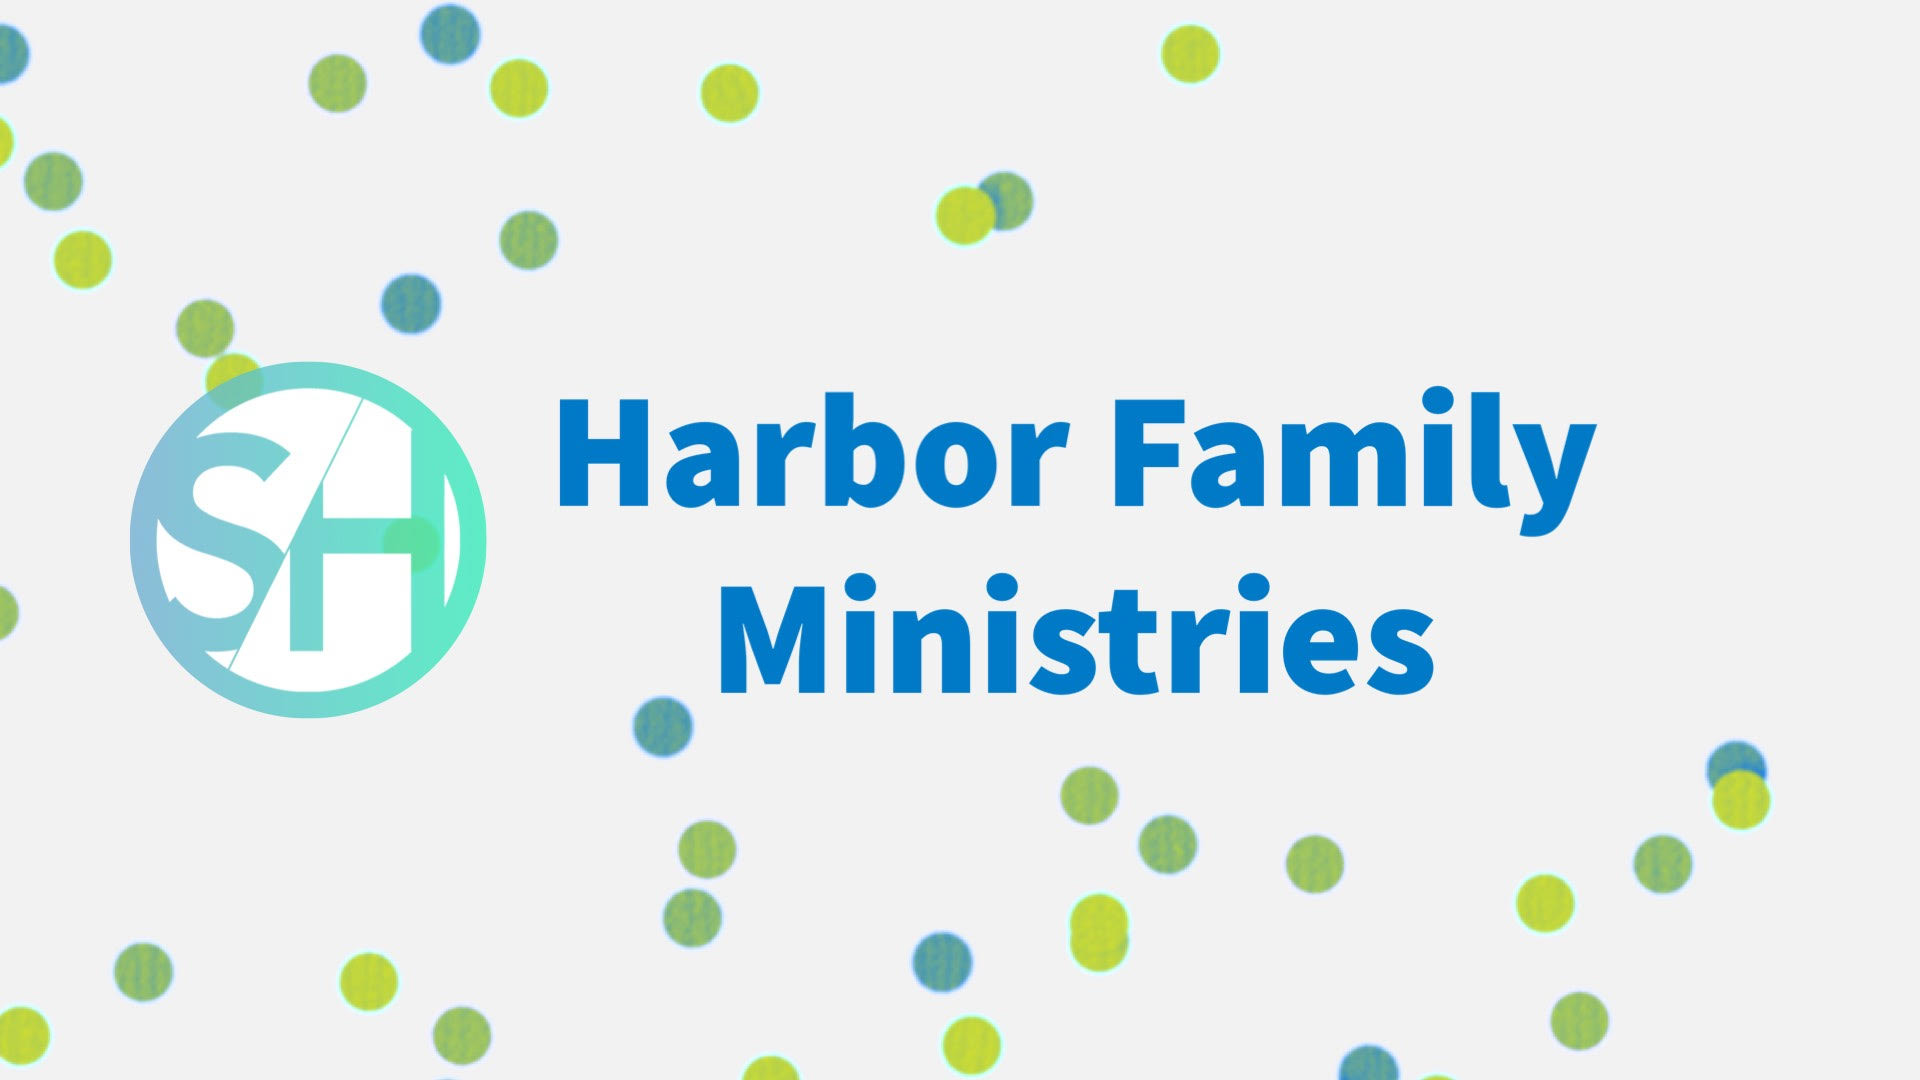 Harbor Family Ministries